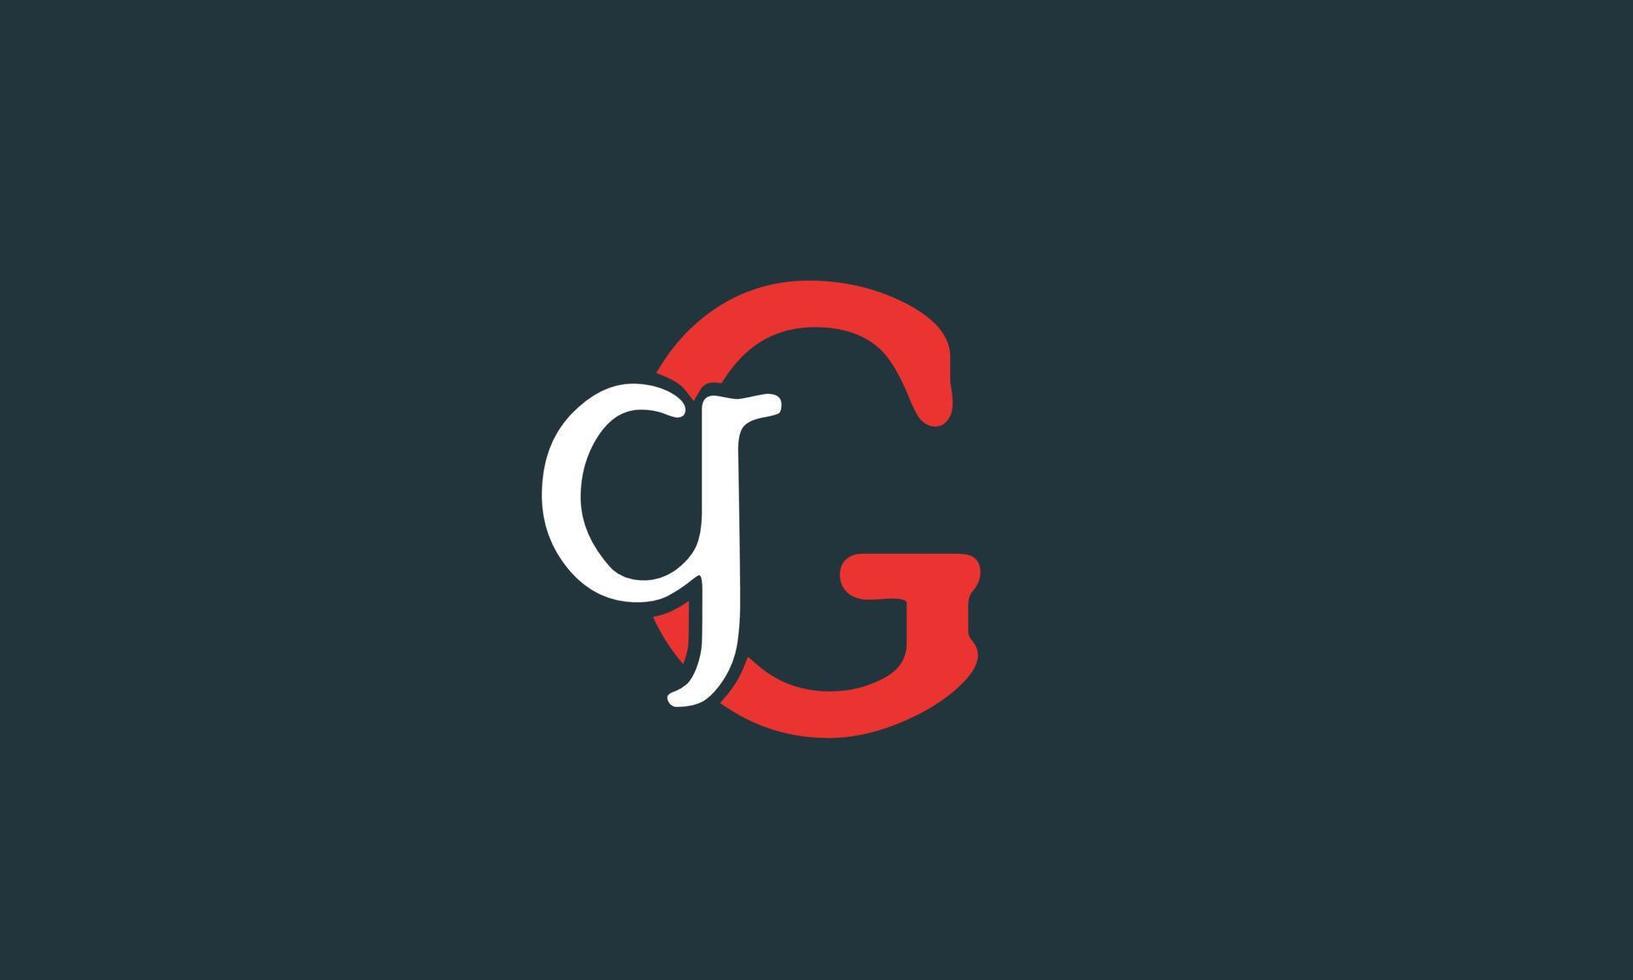 alfabet letters initialen monogram logo qg, gq, q en g vector